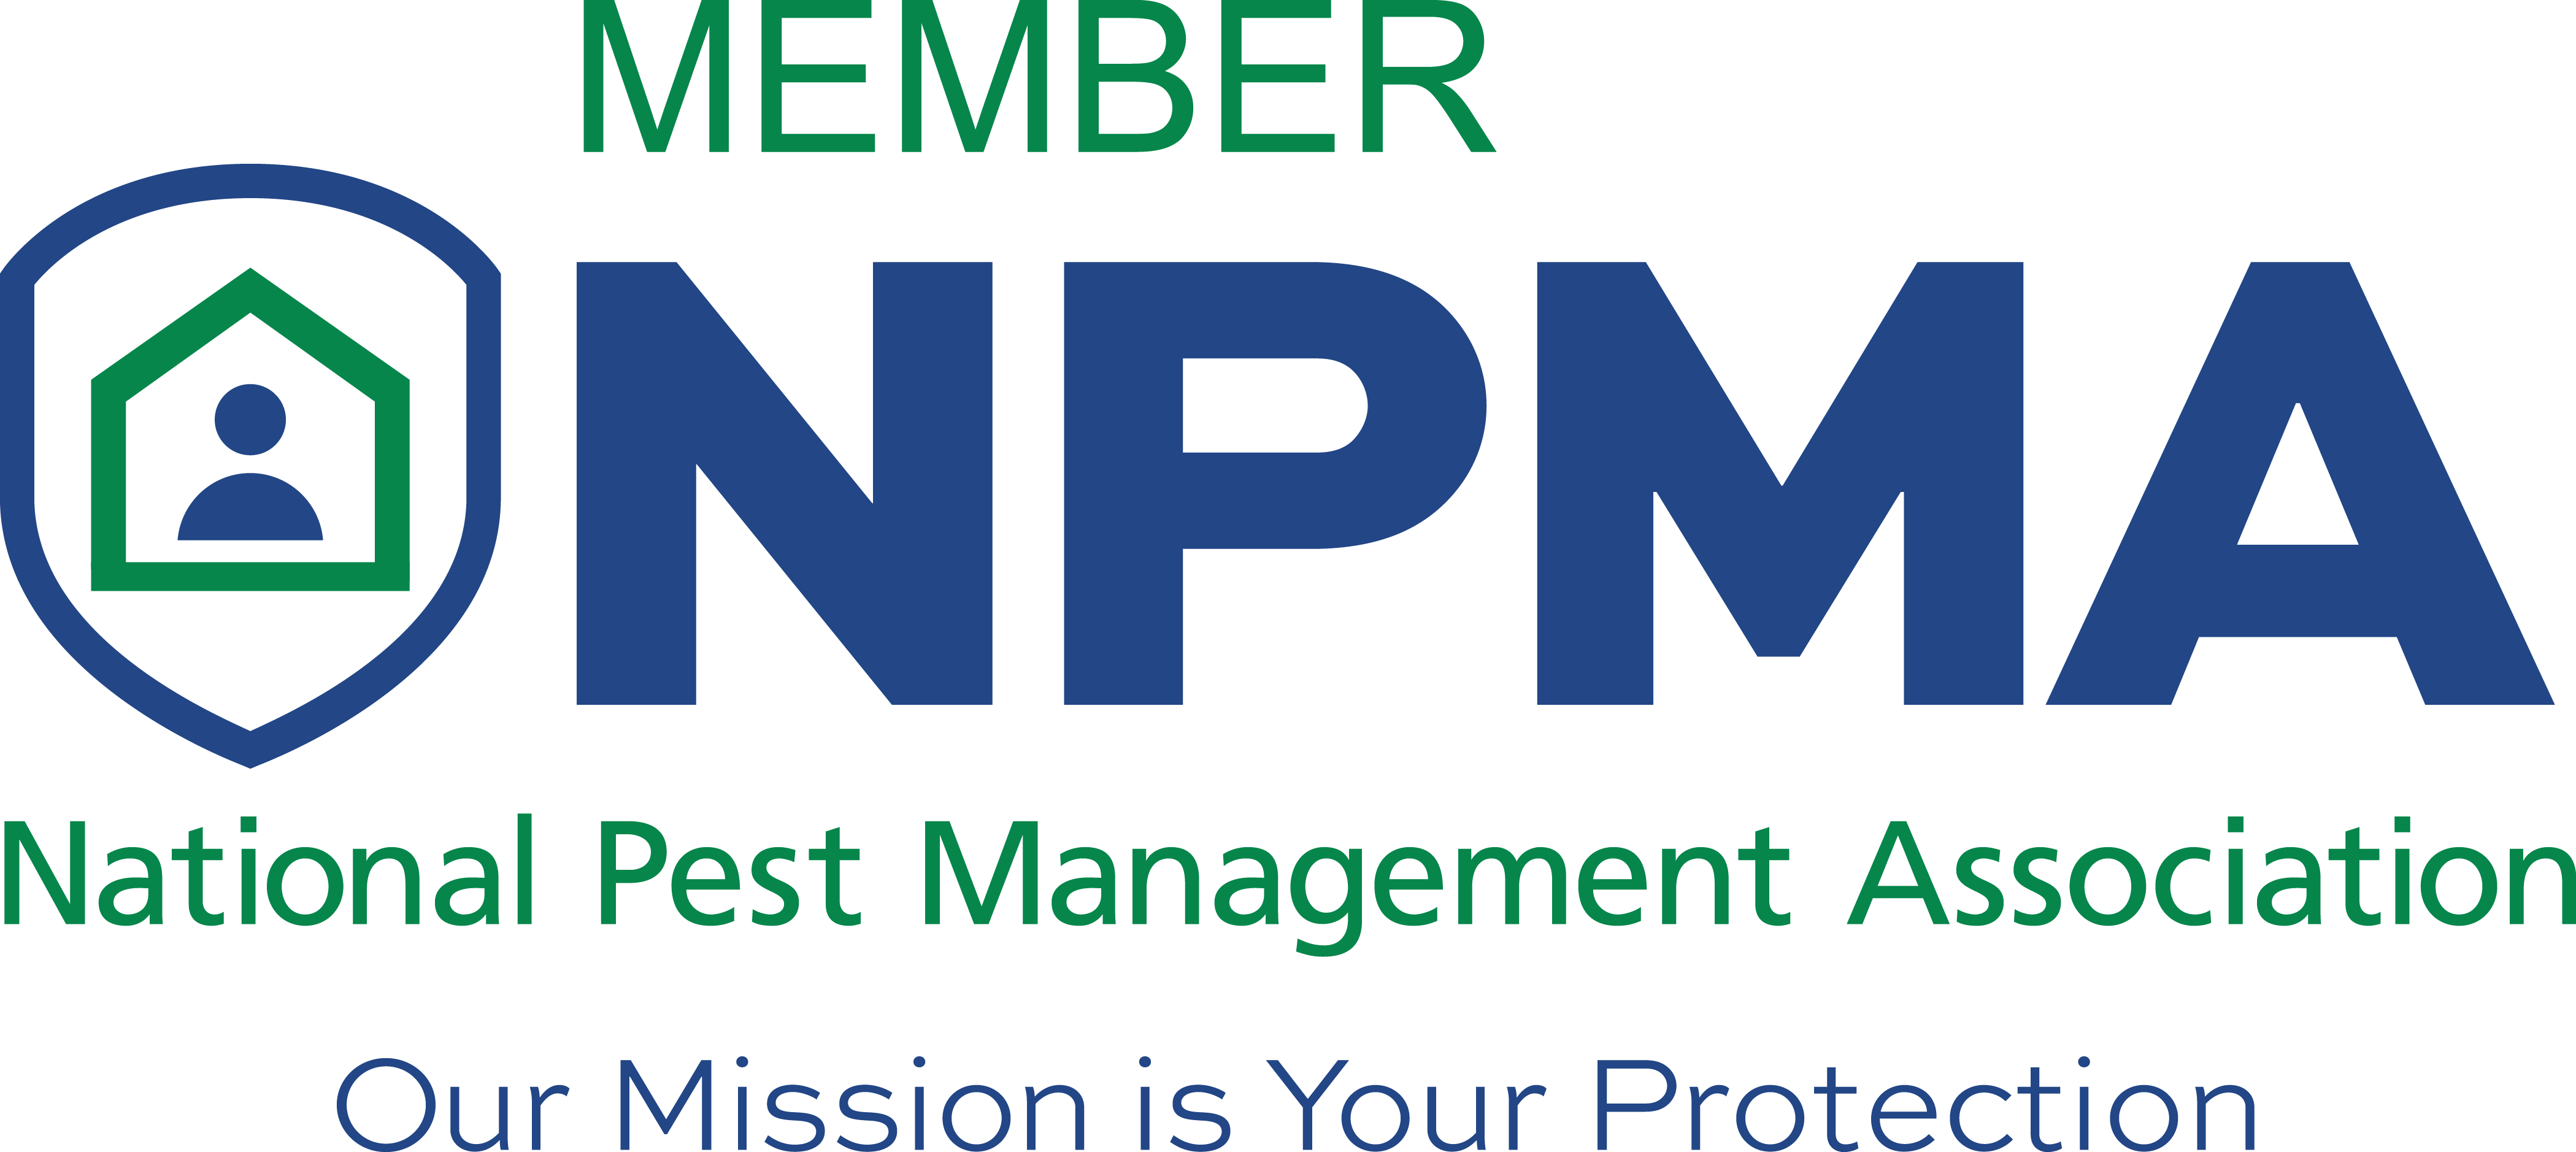 national pest management association member icon